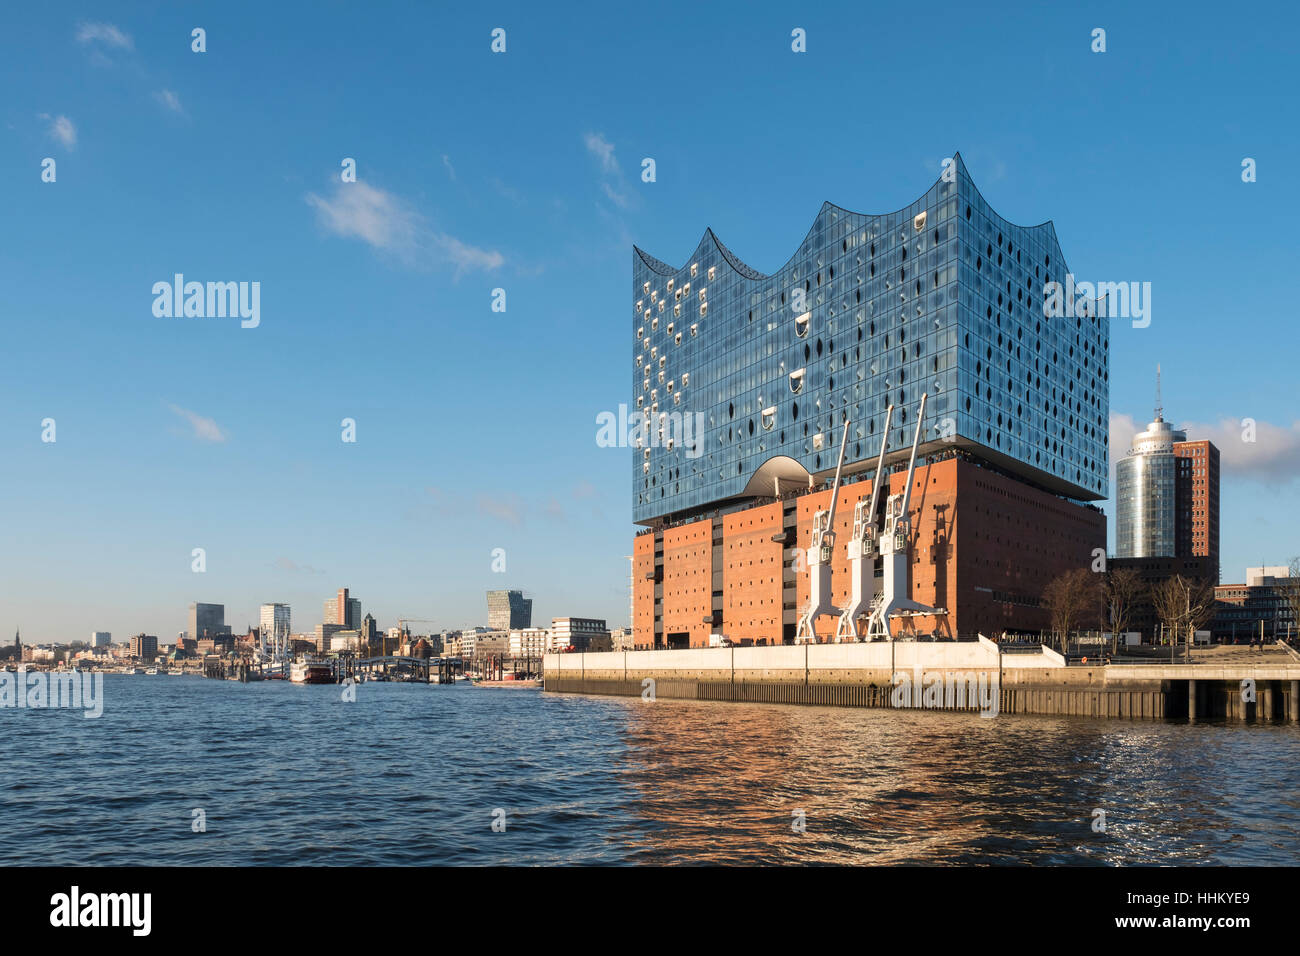 Elbphilharmonie, Hamburg, Germany; View of new Elbphilharmonie opera house in Hamburg, Germany. Stock Photo